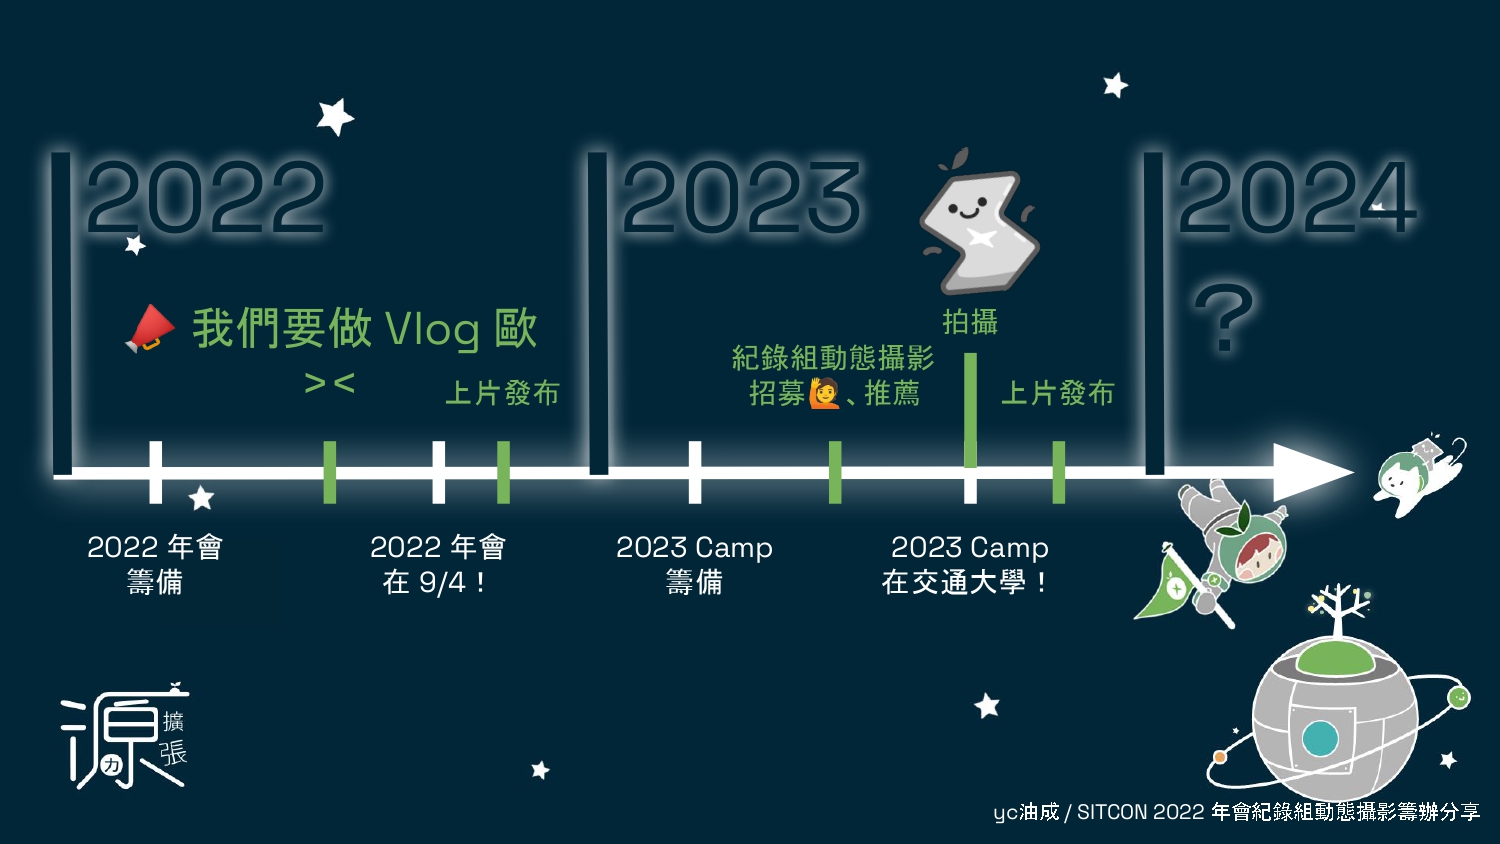 SITCON 2024 負一籌 - 2022 年會紀錄組動態攝影籌辦分享  (1)_page-0003.jpg